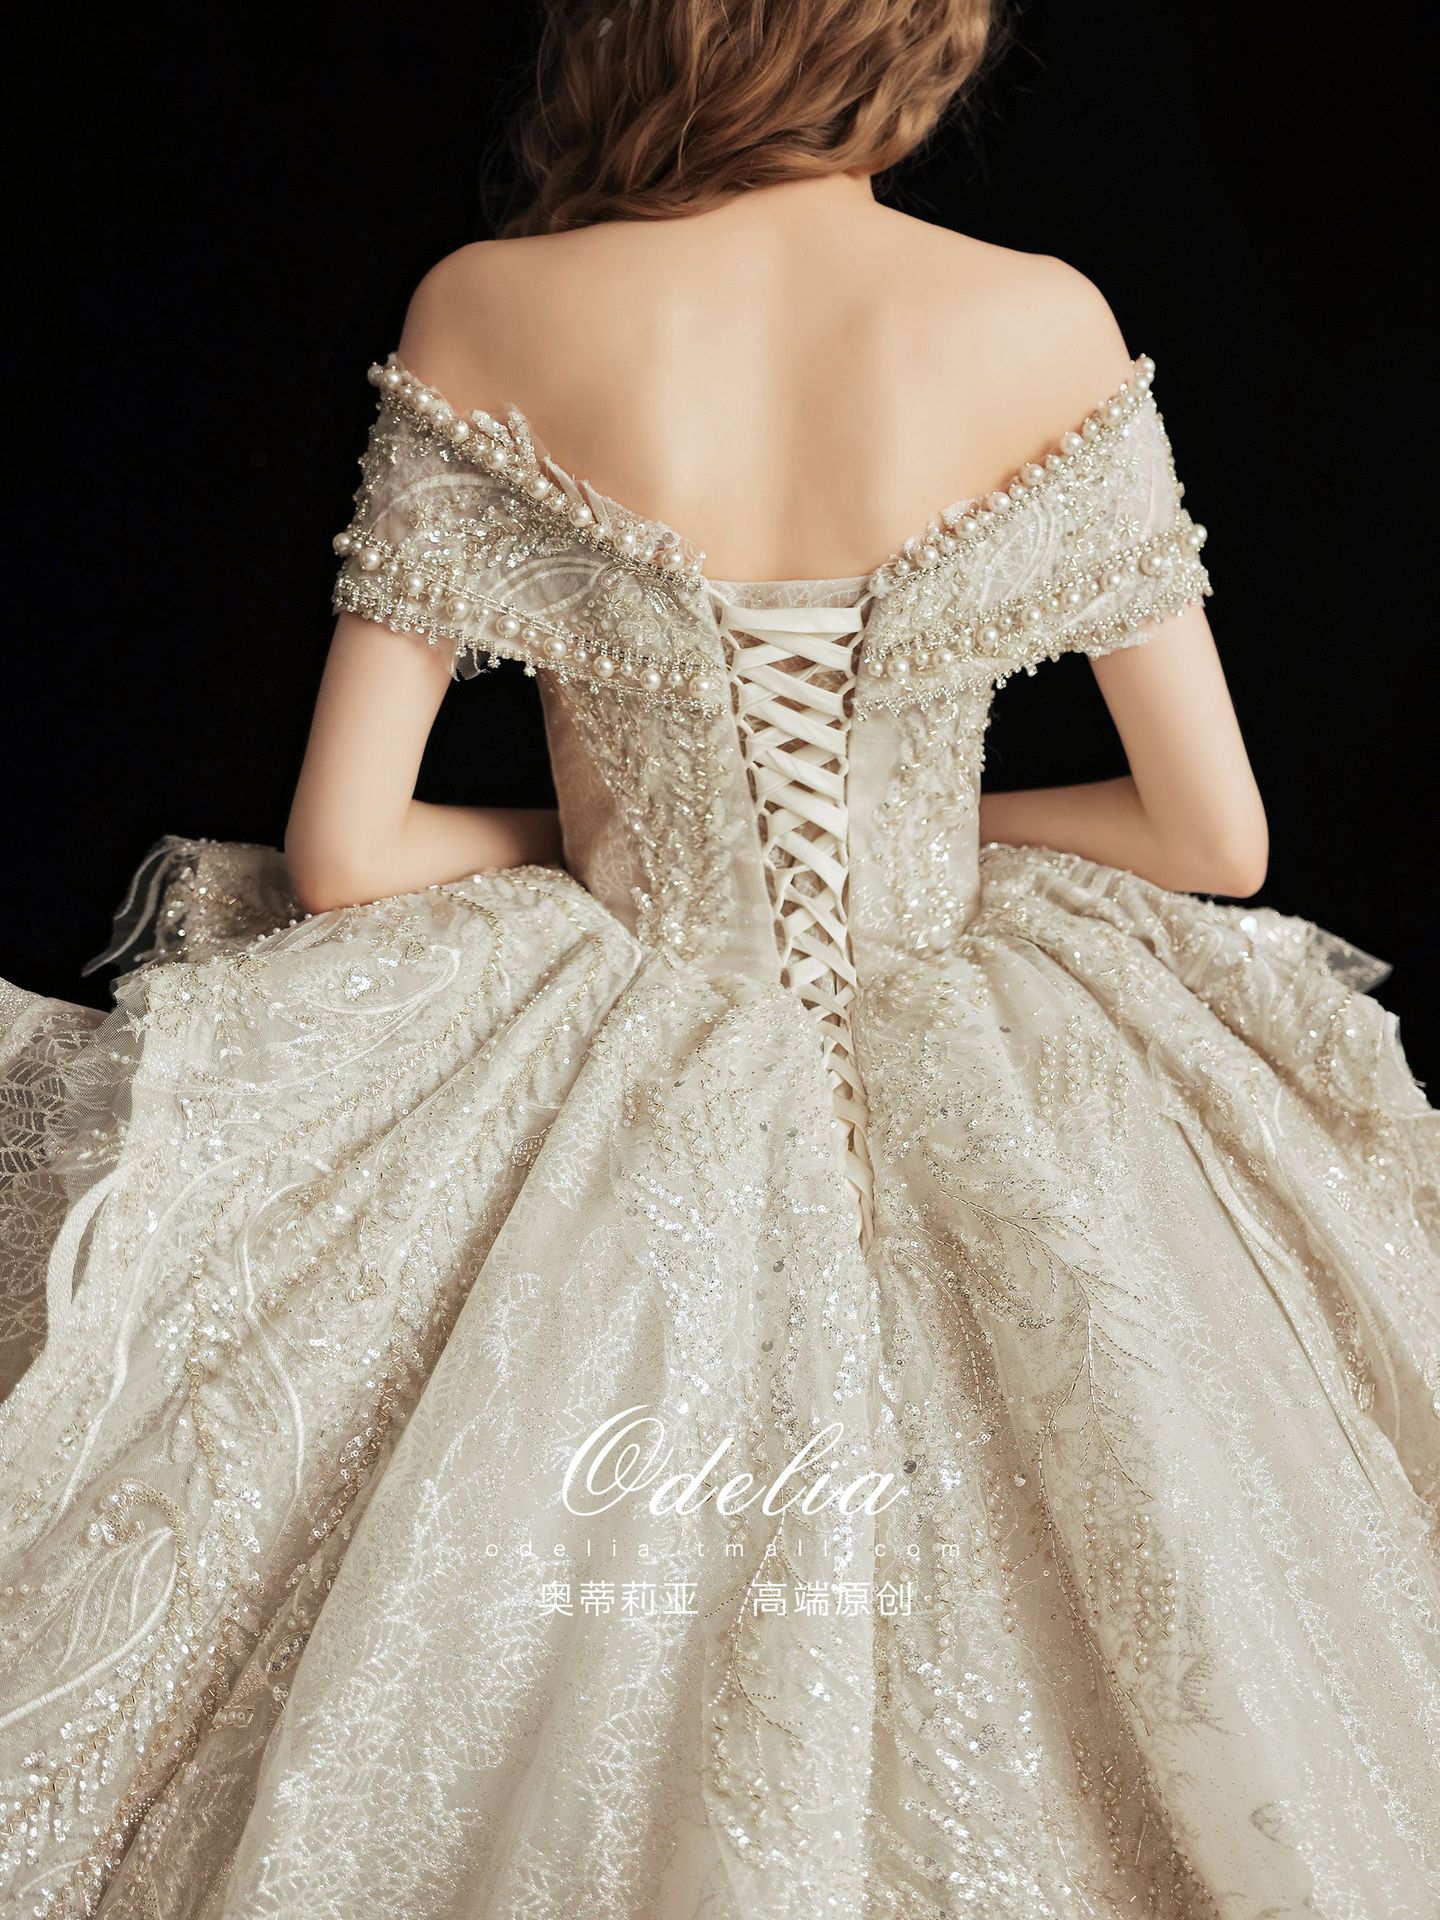 ShiniUni 婚纱作品欣赏 - ShiniUni婚纱礼服高级定制设计 - 设计师品牌